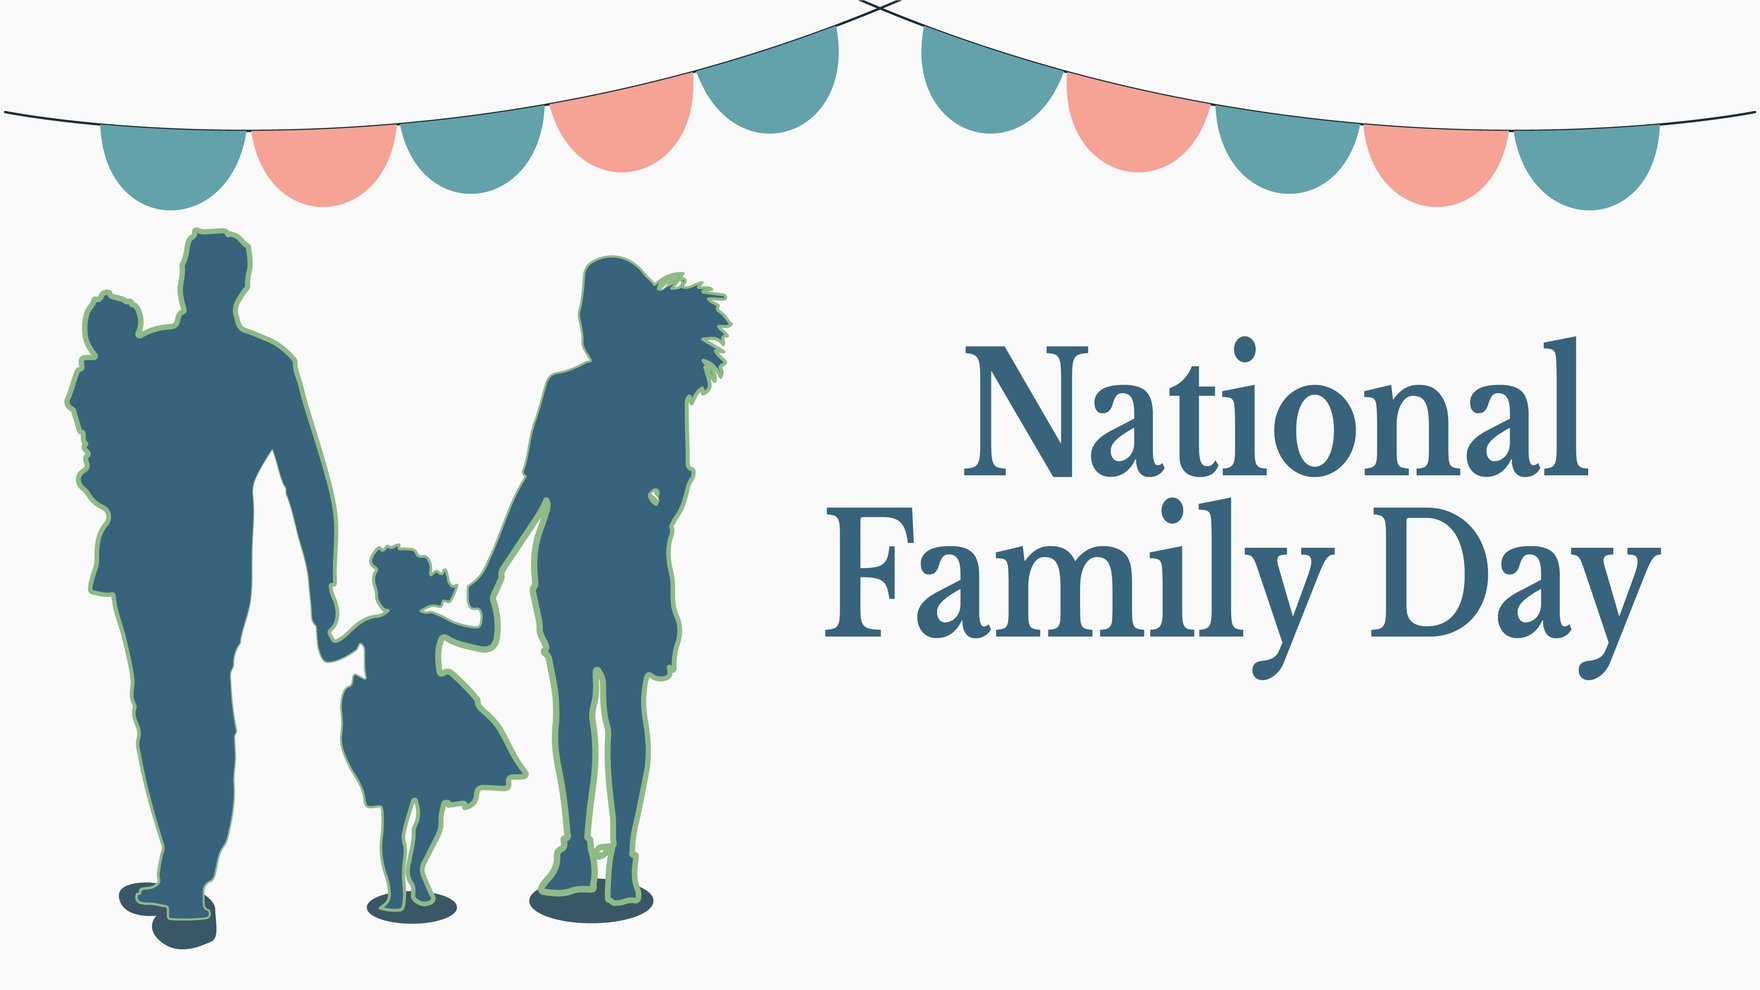 Free National Family Day Image Background